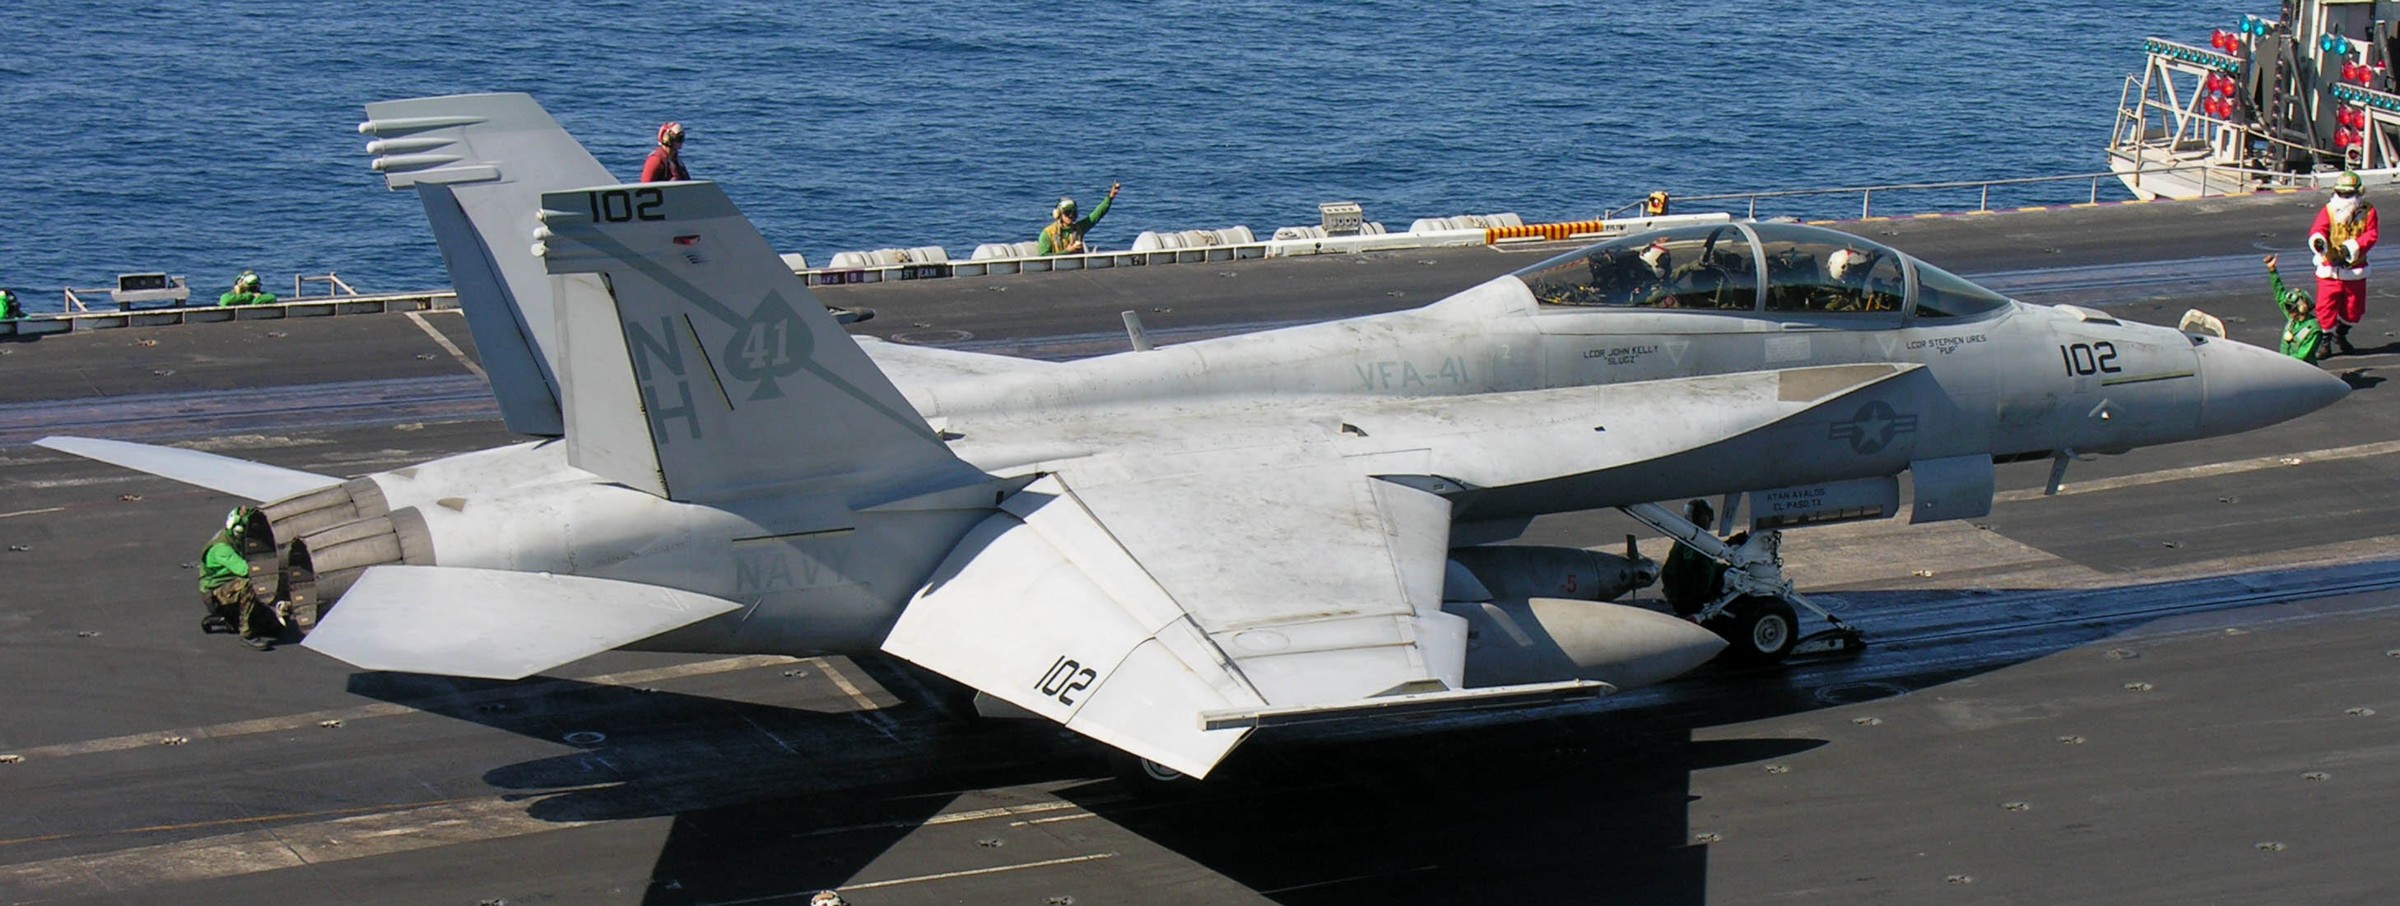 vfa-41 black aces strike fighter squadron f/a-18f super hornet cvw-11 cvn-68 uss nimitz us navy 12